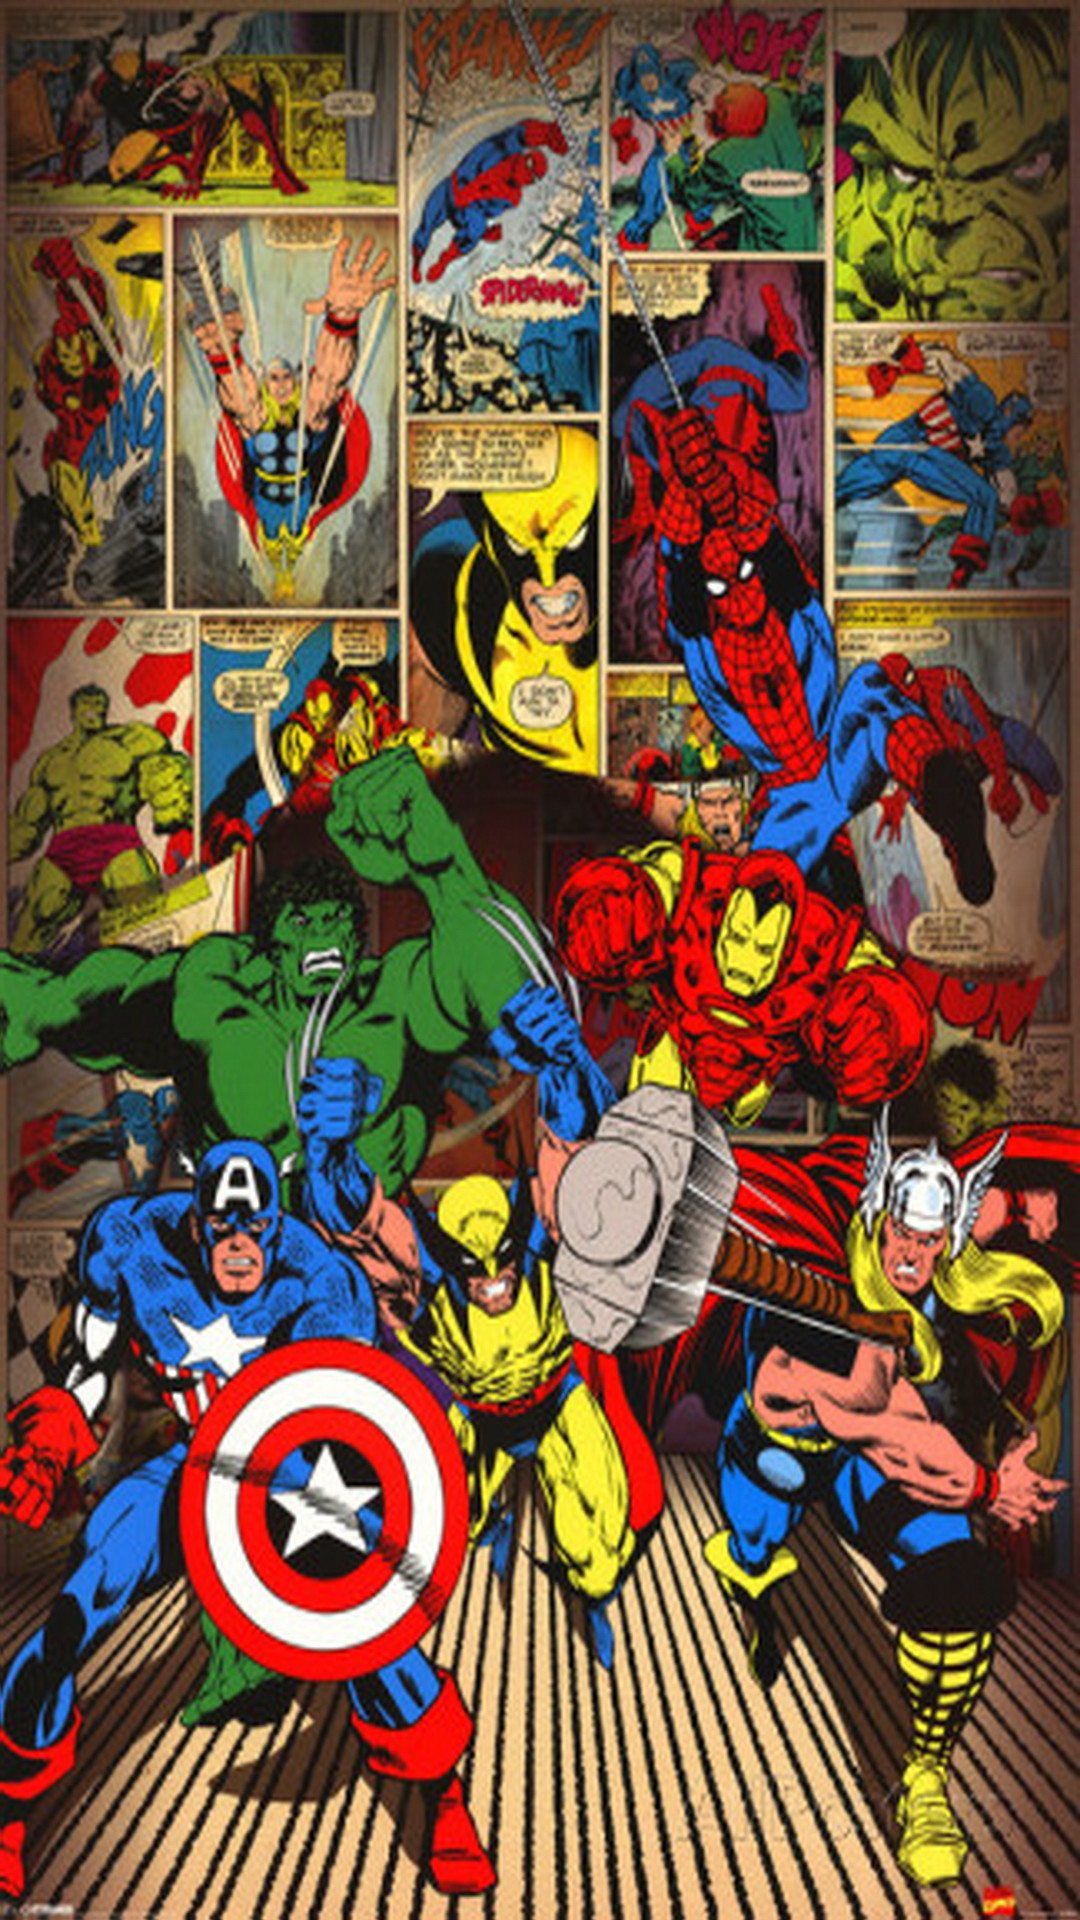 1080x1920 Marvel-Here-Come-the-Heroes-iPhone-6-Wallpaper-Plus-Hd.jpg 1,080Ã1,920  pixeles | Proyectos que debo intentar | Pinterest | Hintergrundbilder